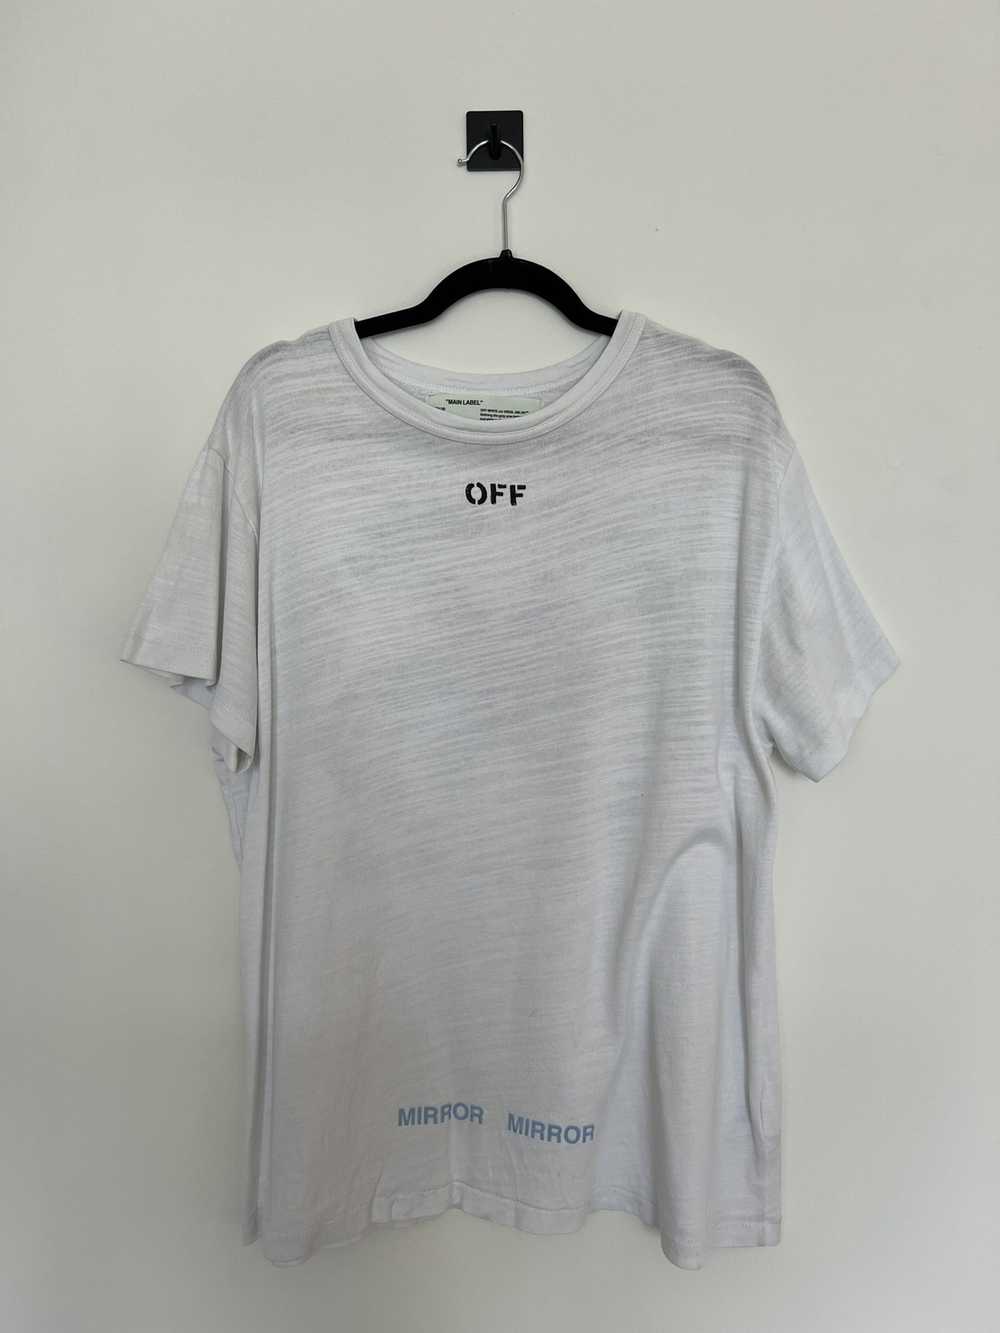 Off-White Off White Mirror Mirror T-Shirt - image 1